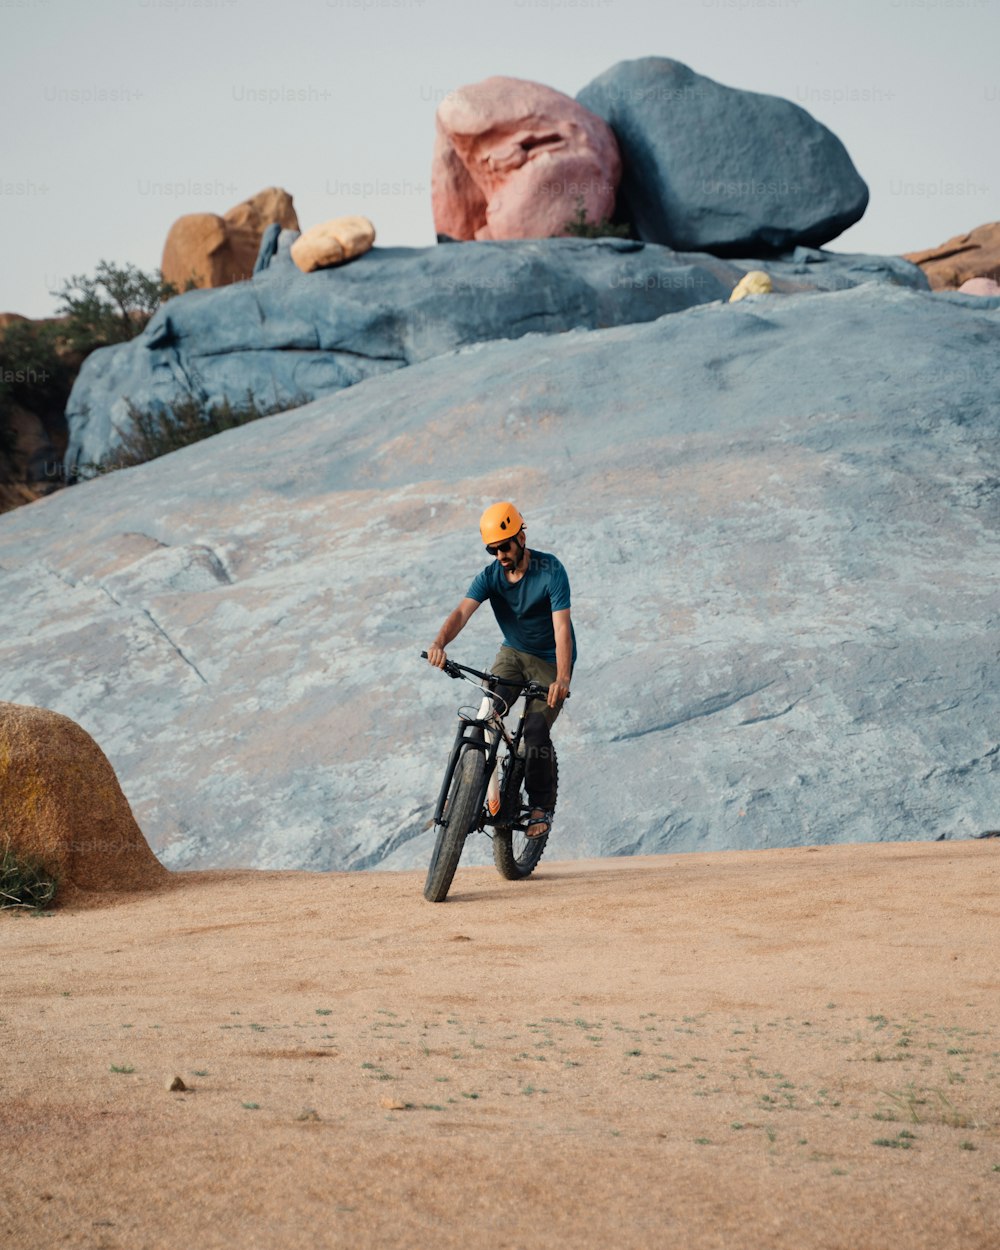 a man riding a bike on top of a dirt field